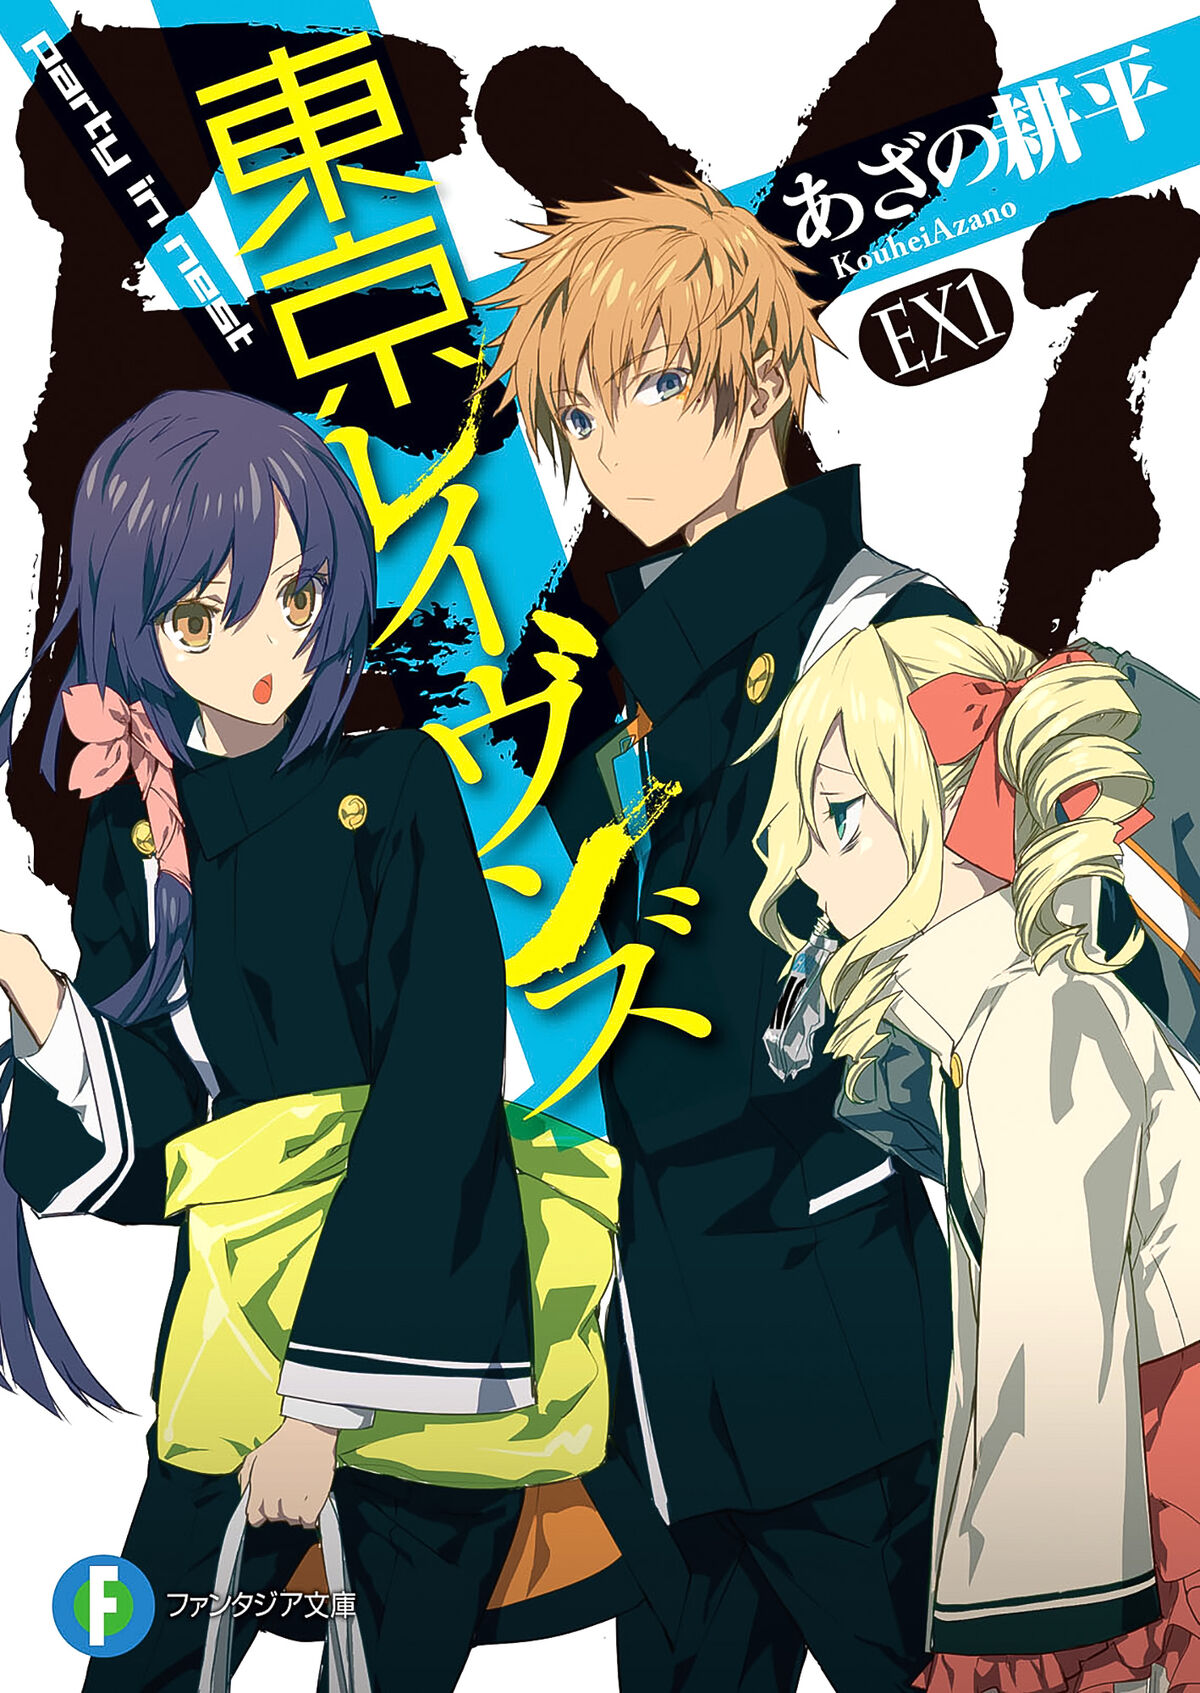 Tokyo Ravens Light Novel Volume 11, Tokyo Ravens Wiki